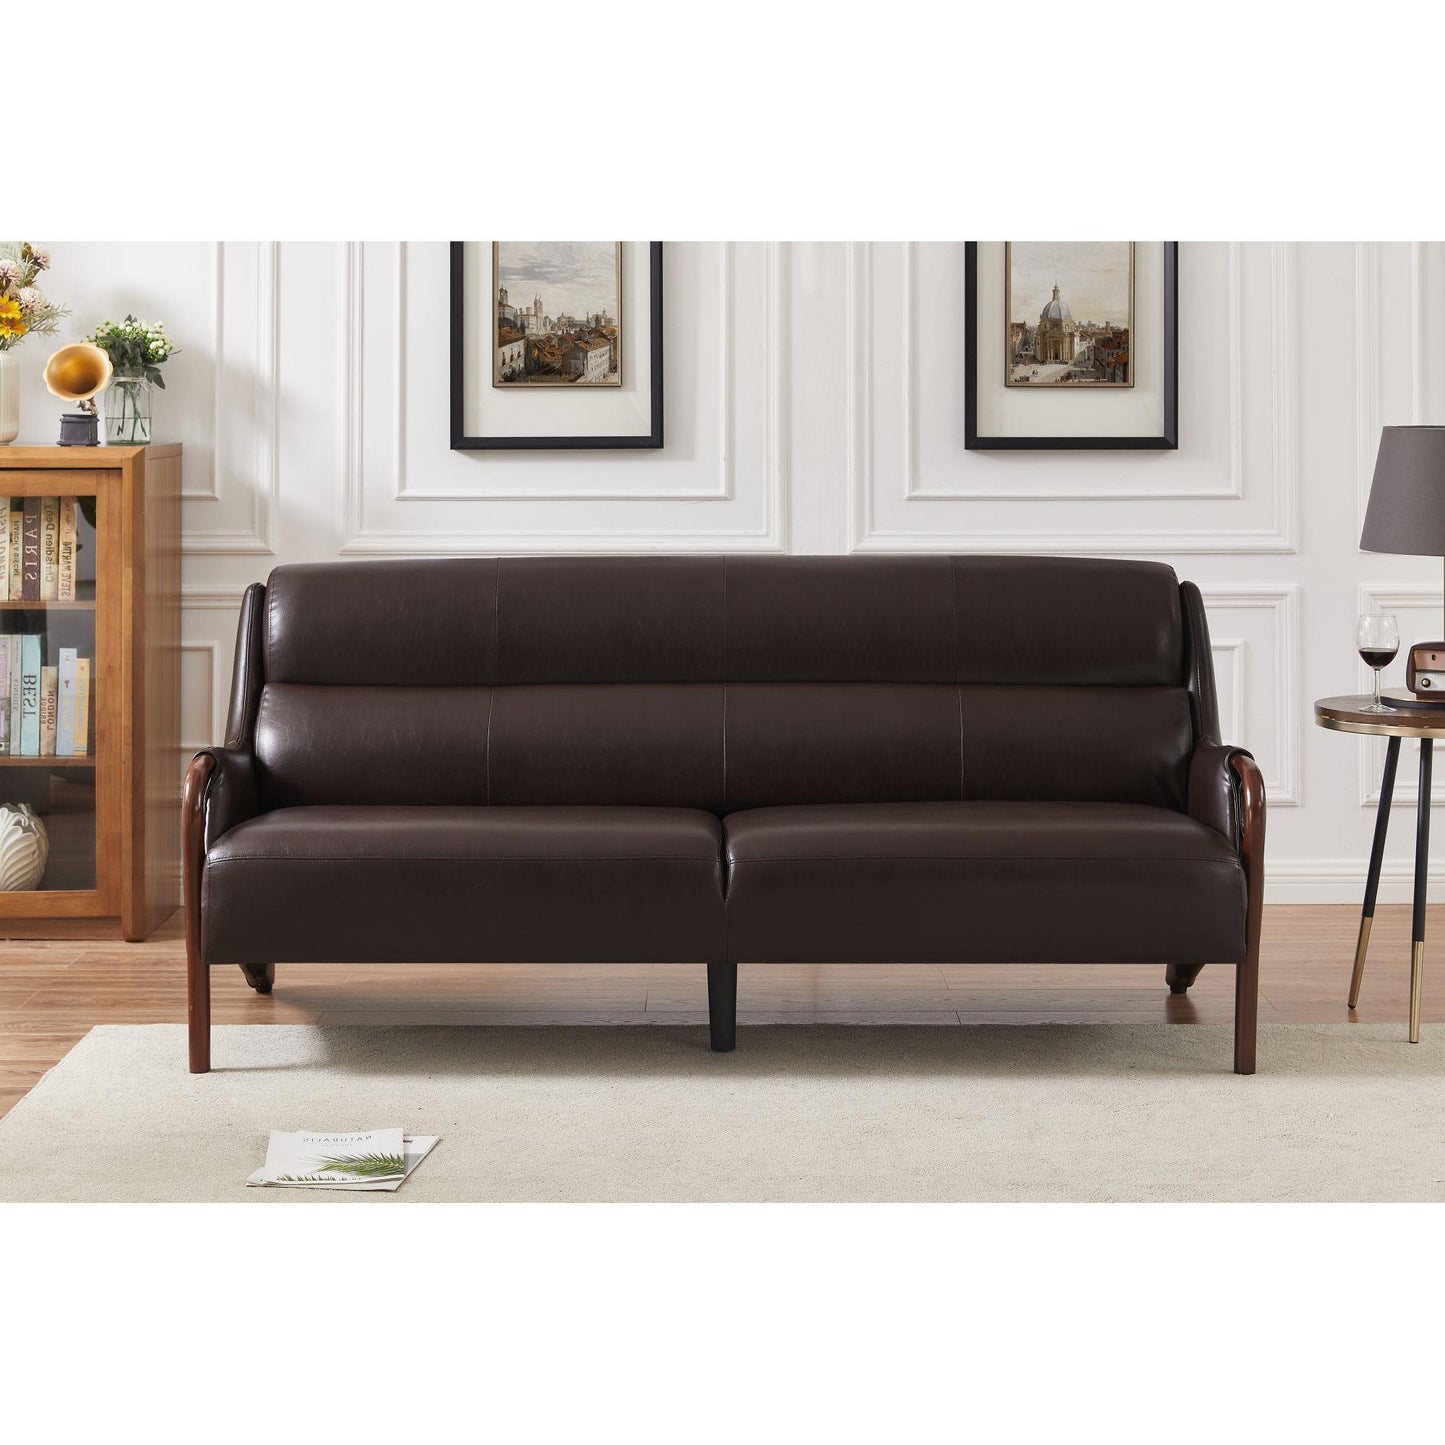 Modern-Central Sofa